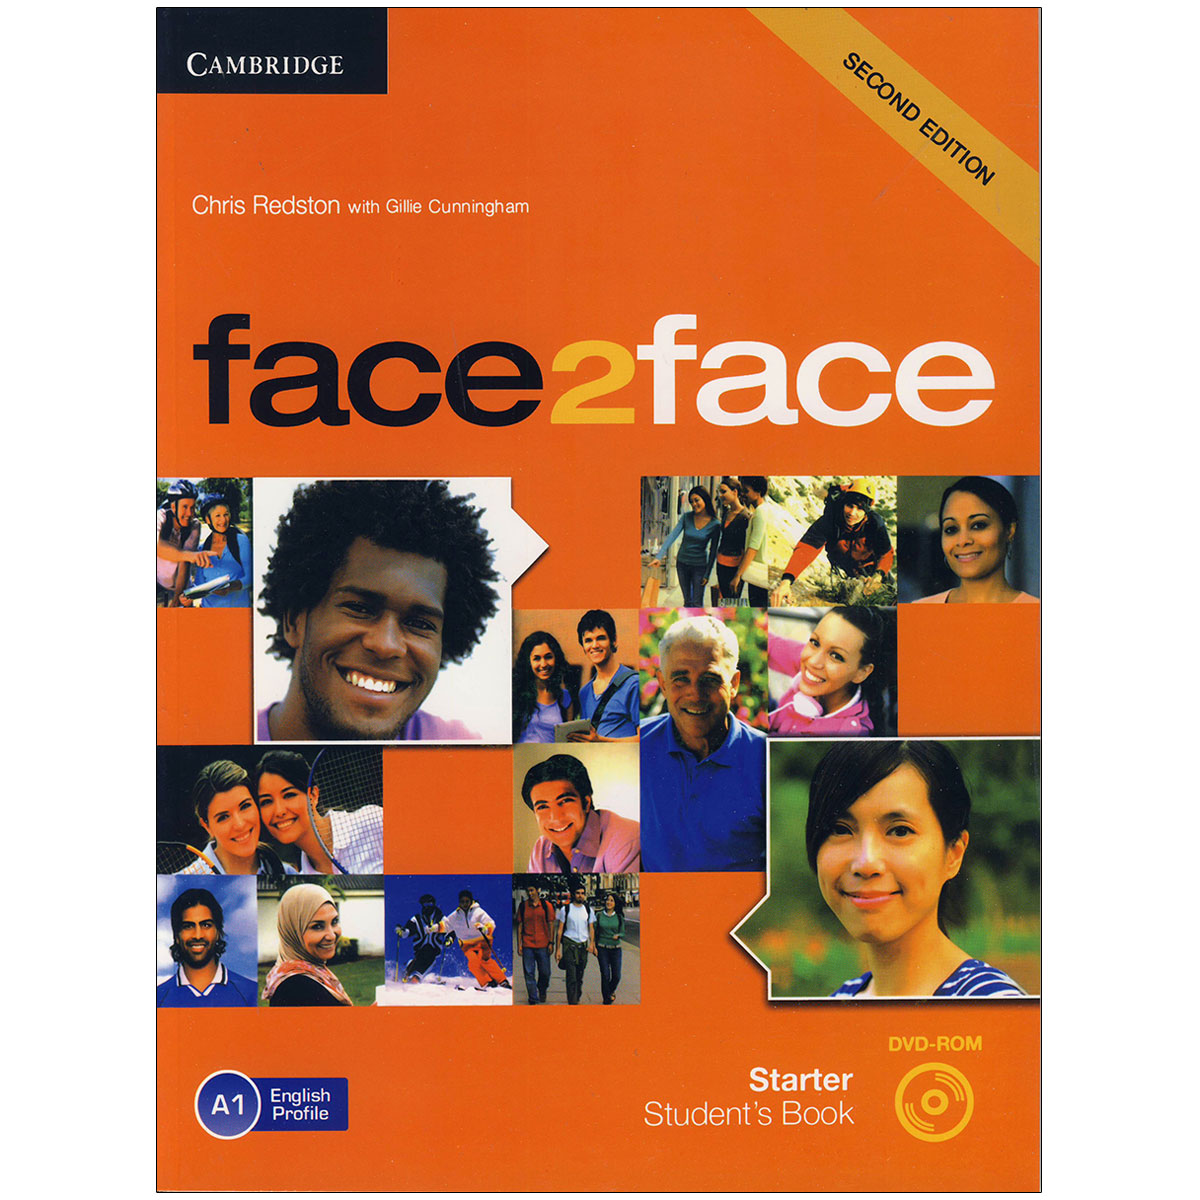 Фейс ту фейс. Face2face учебник. Face to face учебник. Учебник face2face Elementary. Face to face Cambridge.